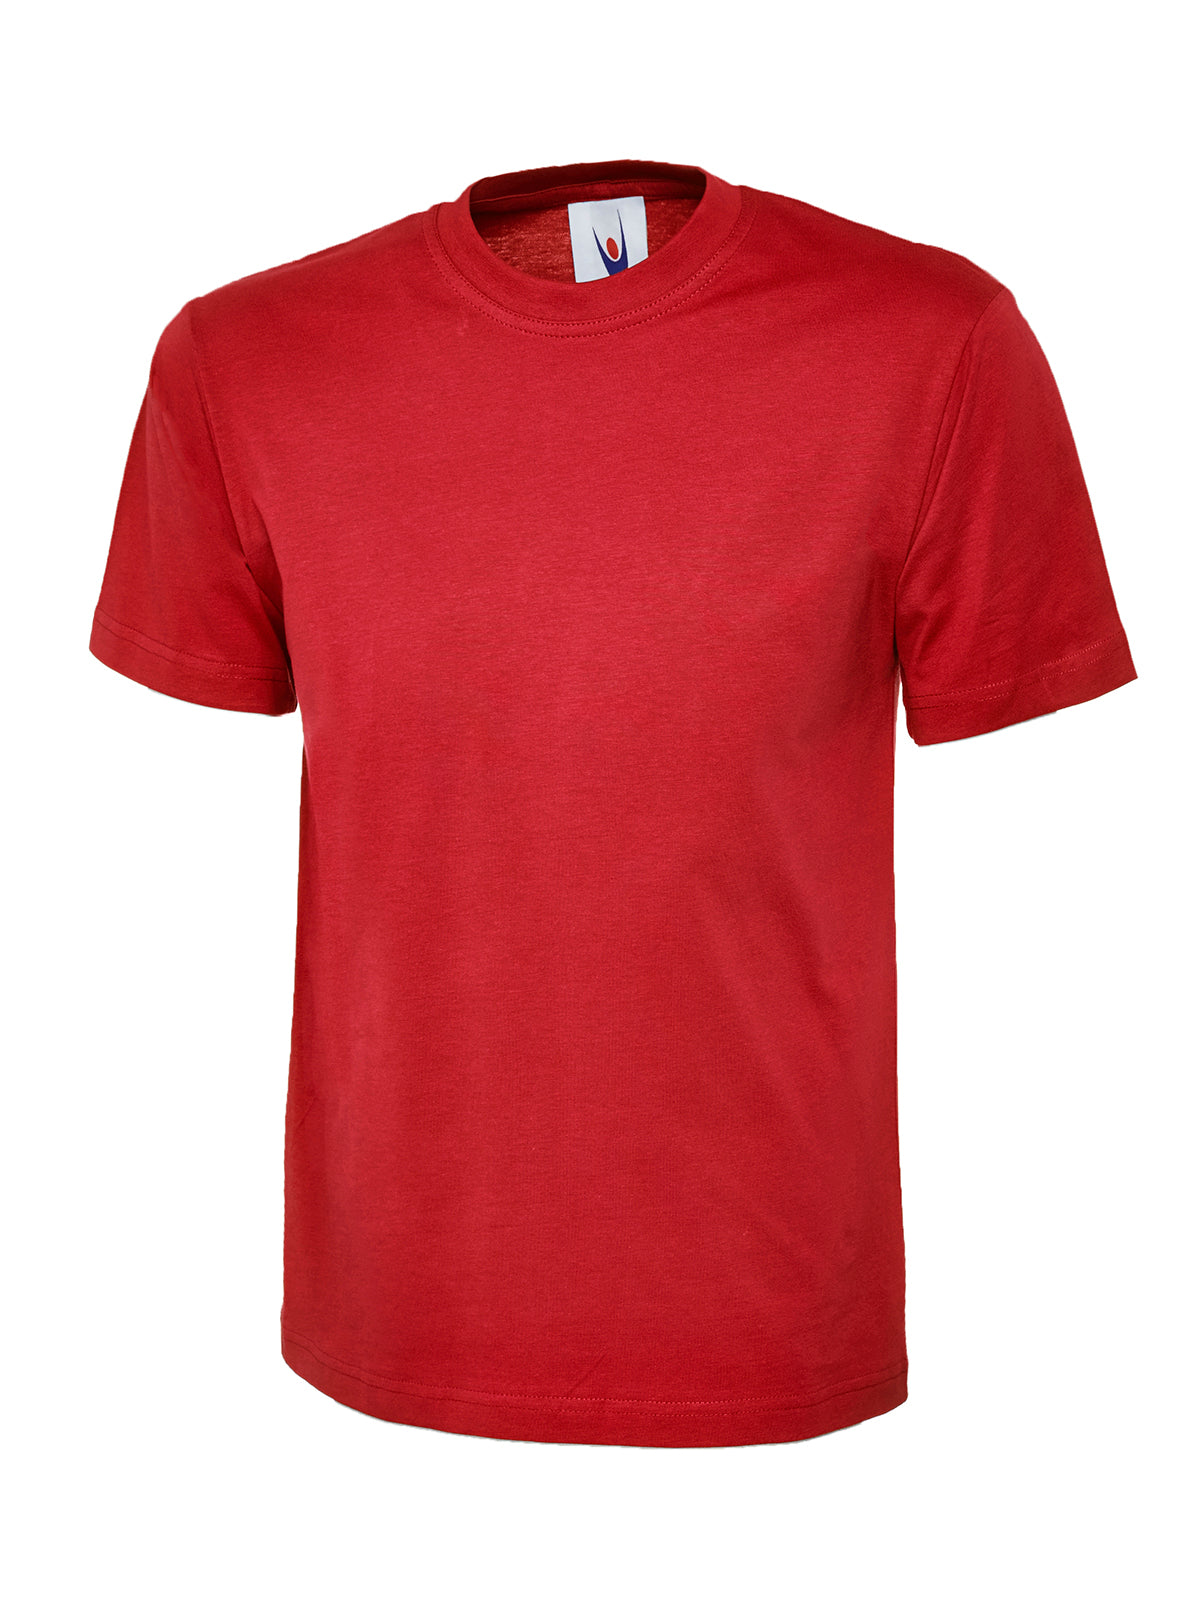 Uneek Childrens T-shirt UC306 - Red